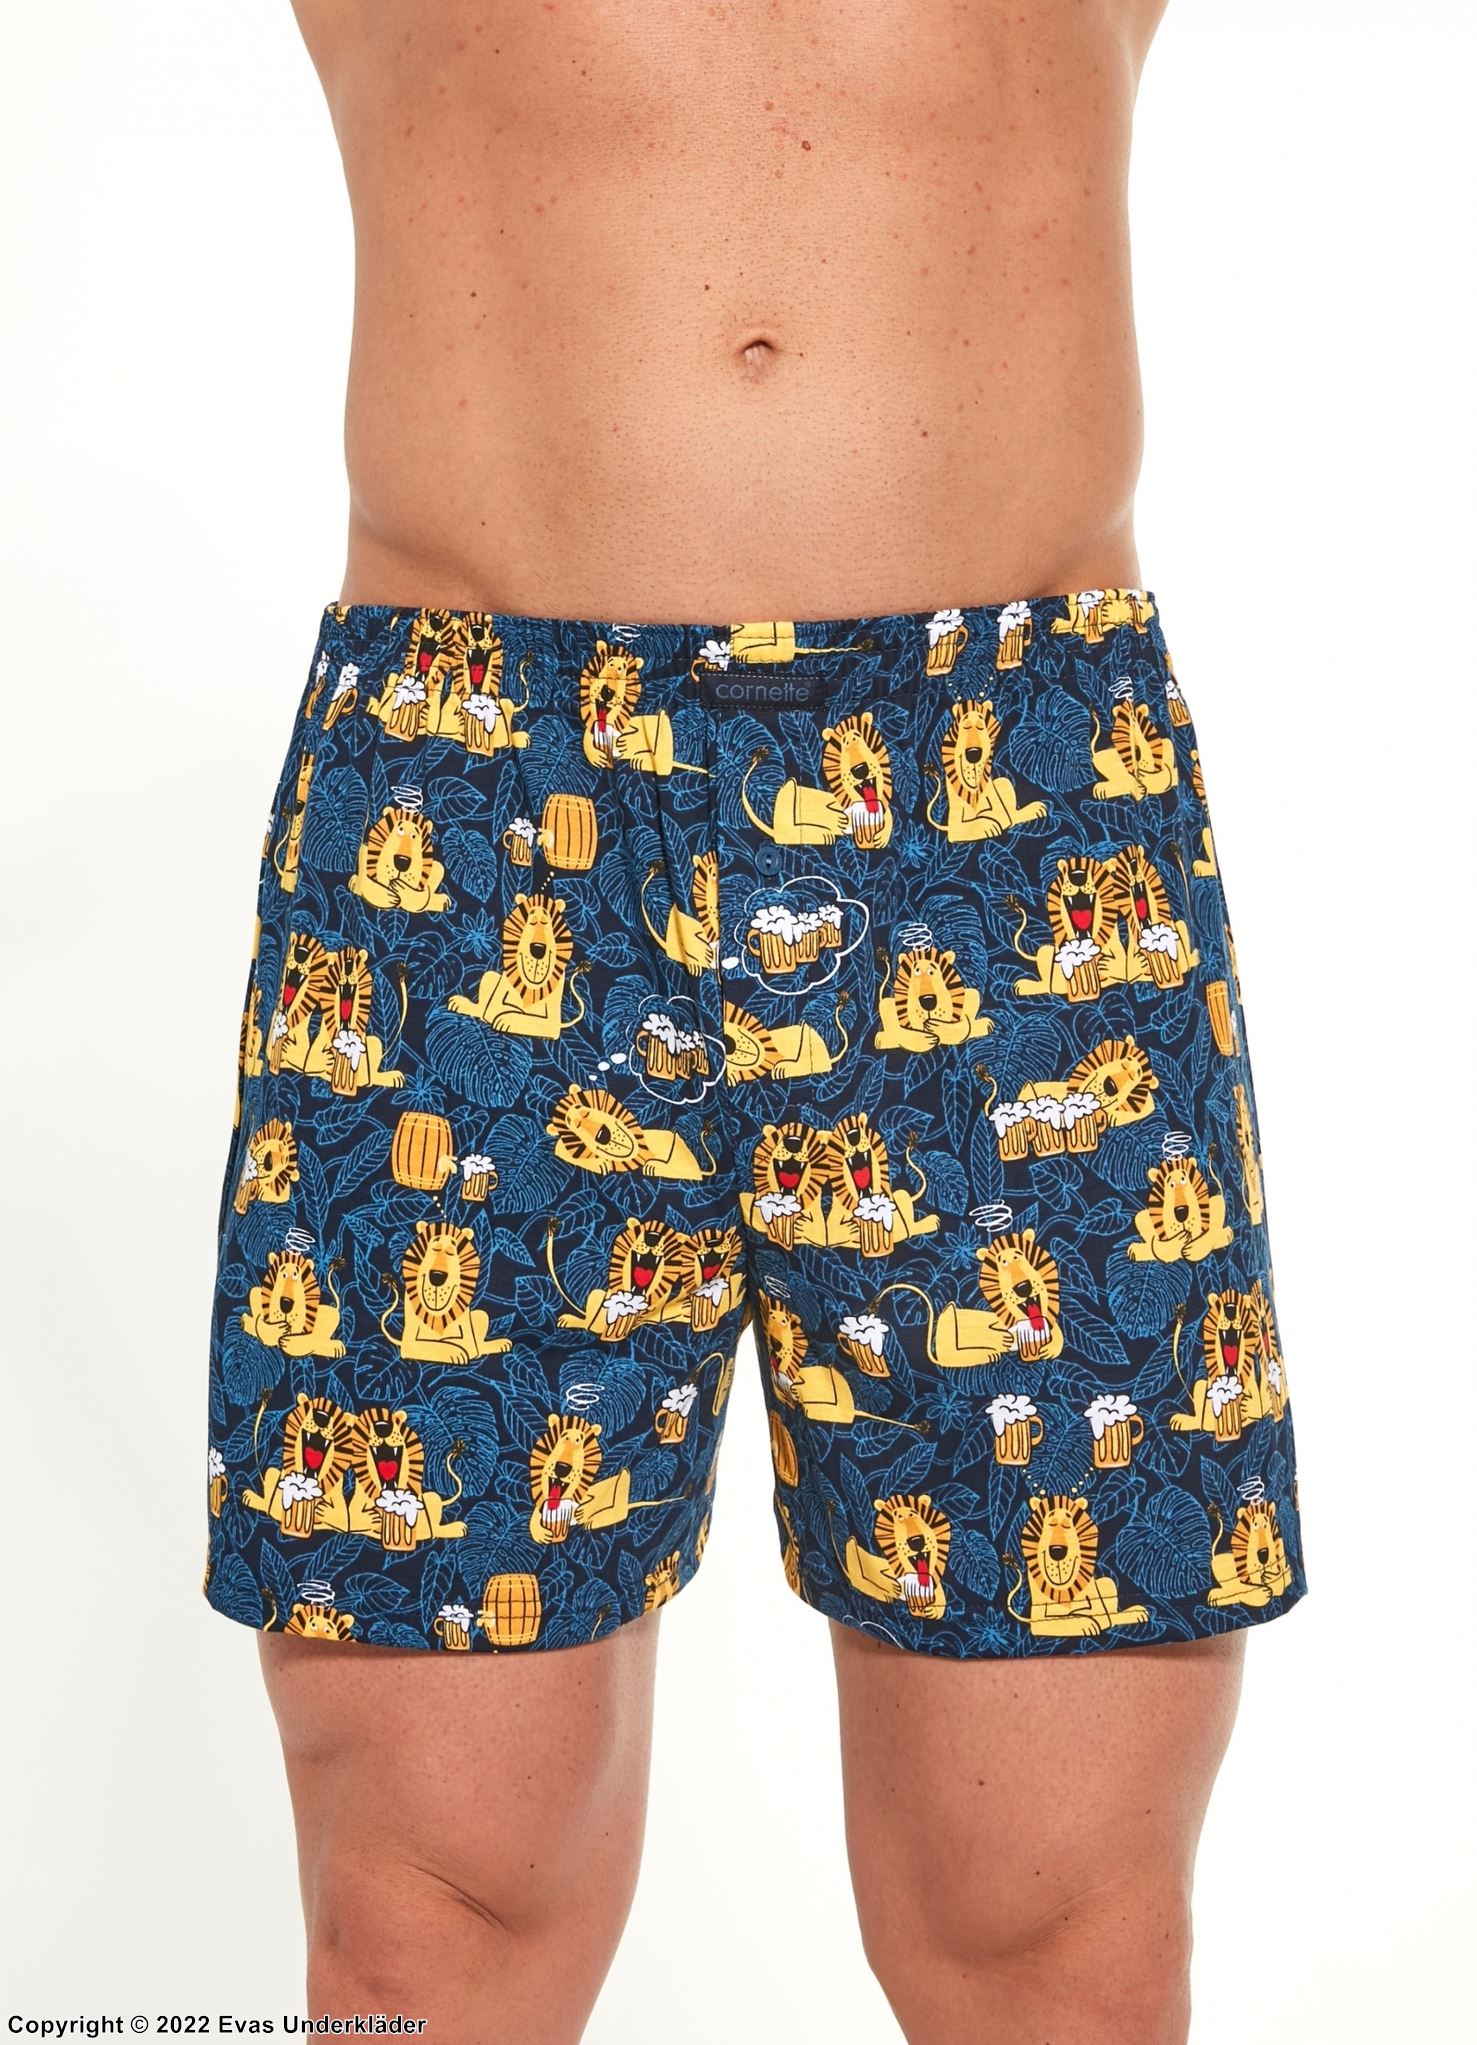 Men's boxer shorts, high quality cotton, lions (pattern)